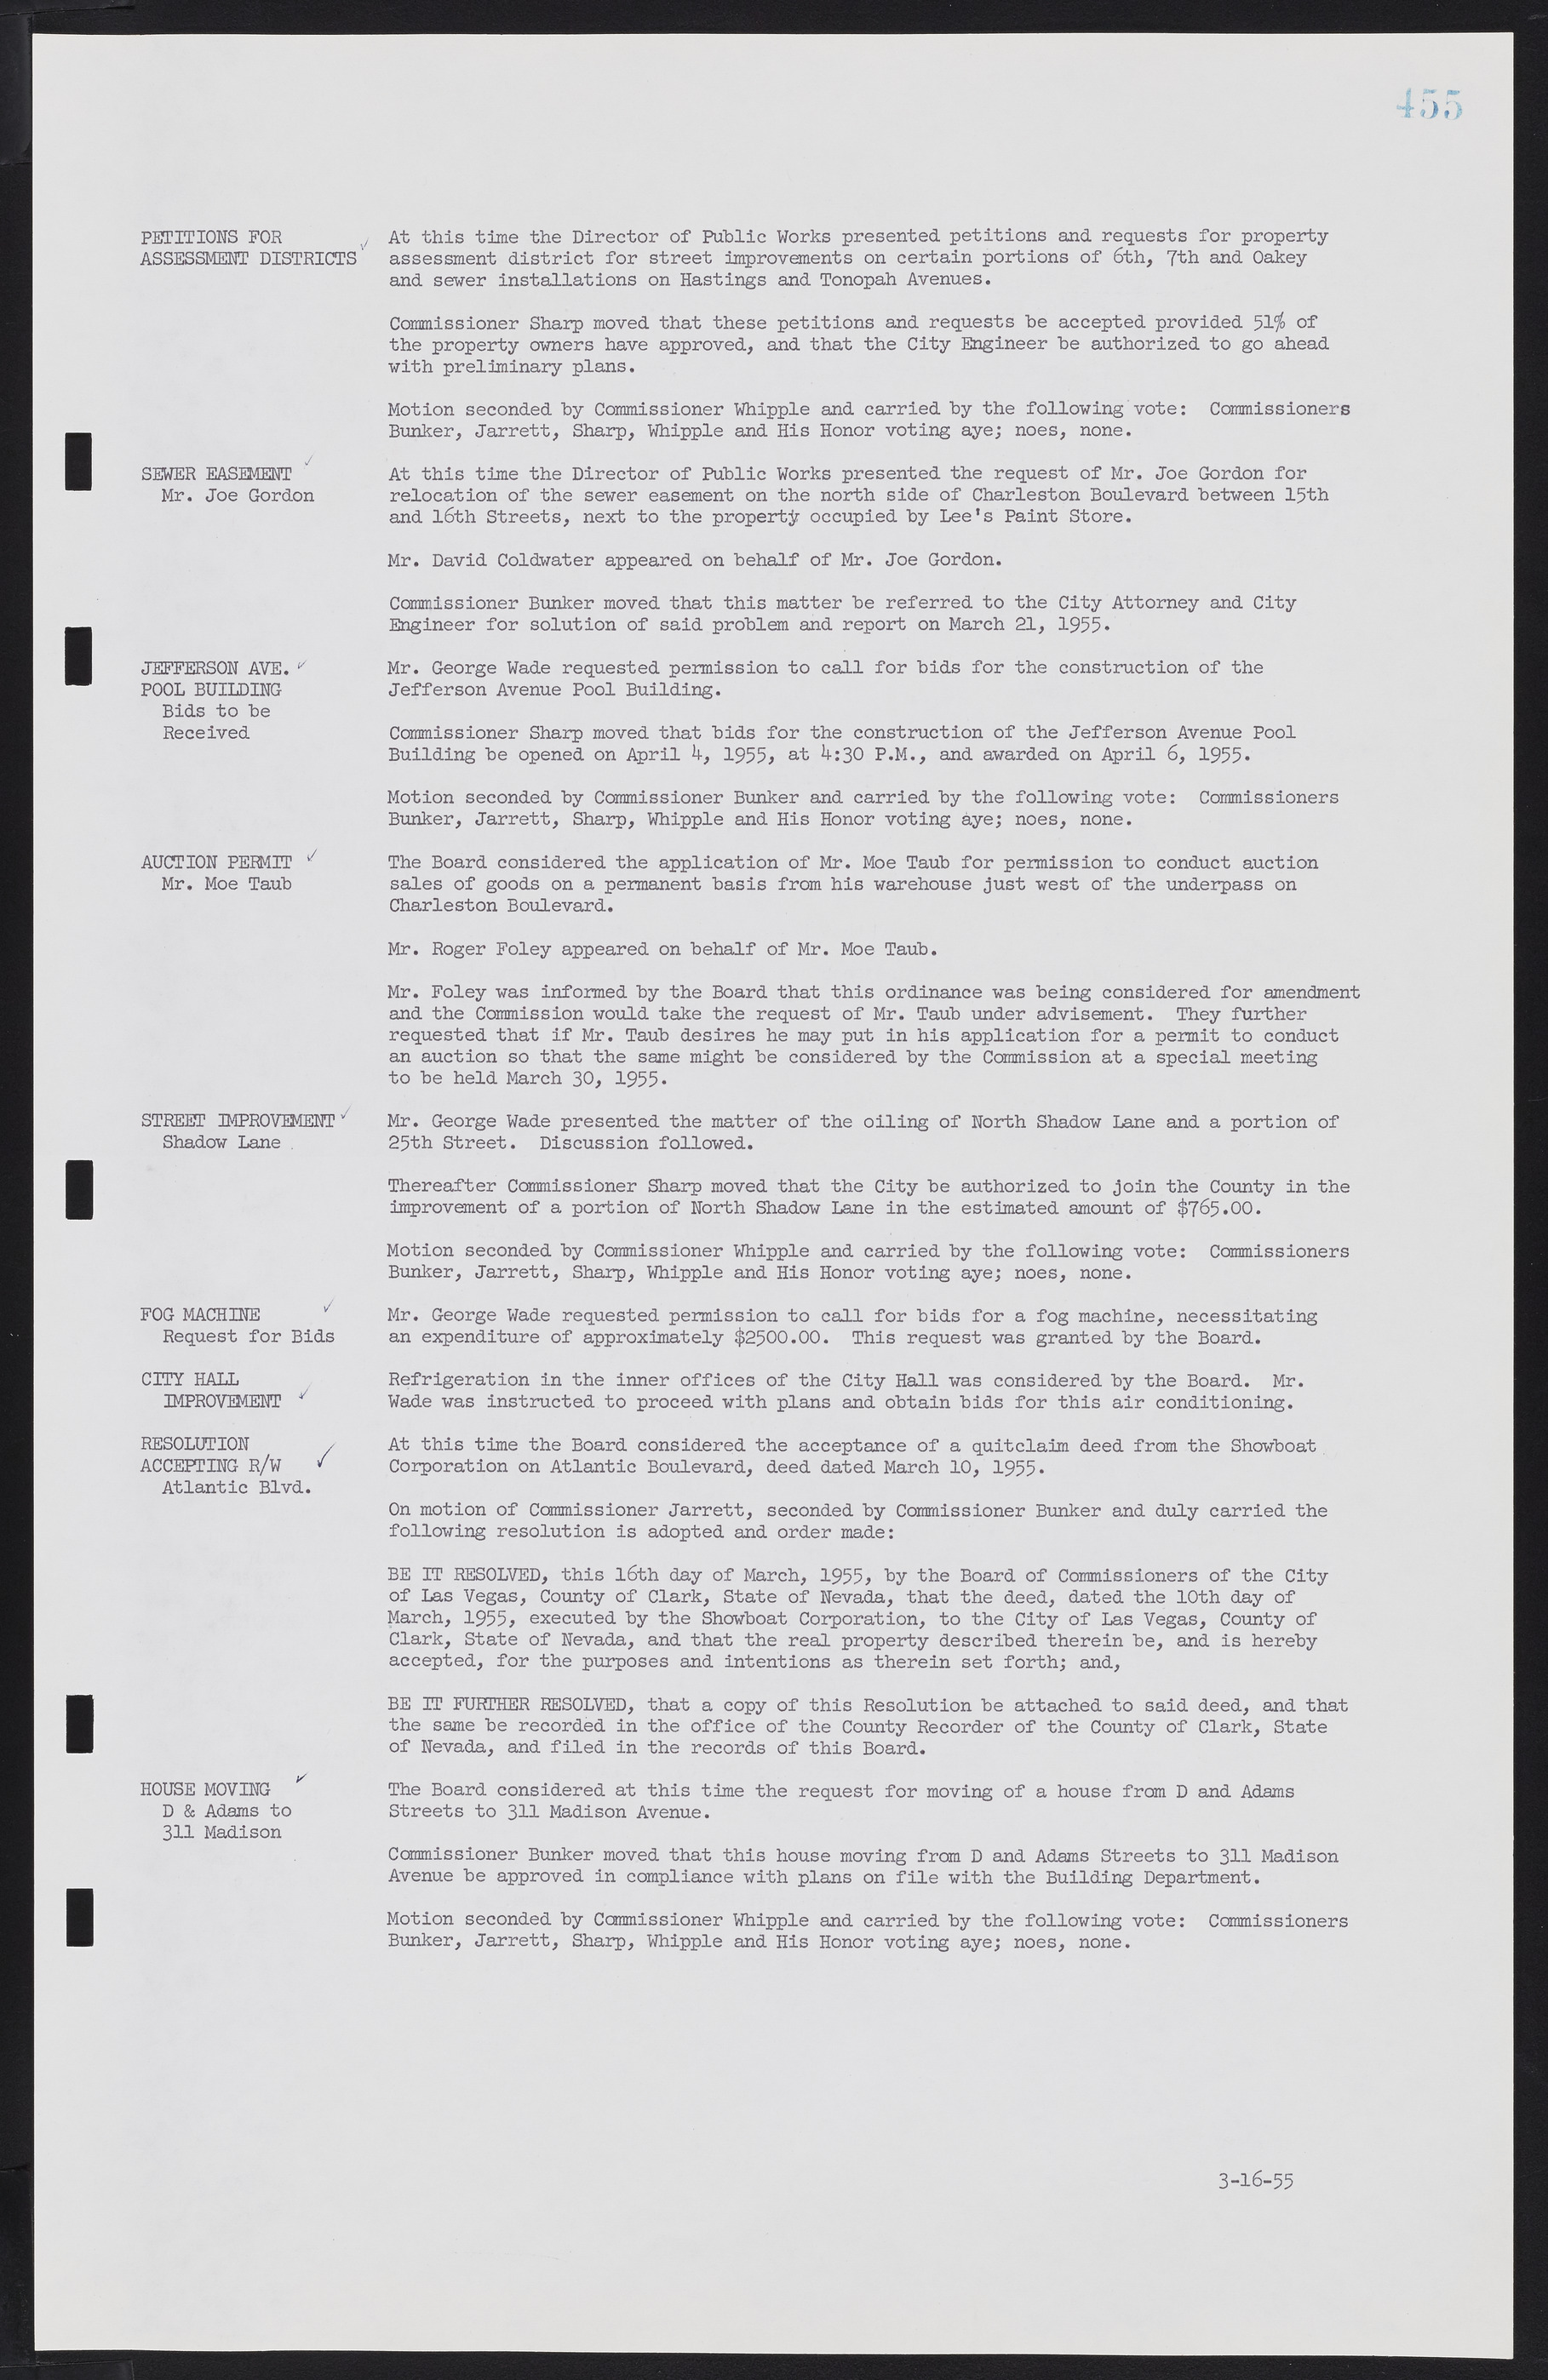 Las Vegas City Commission Minutes, February 17, 1954 to September 21, 1955, lvc000009-461